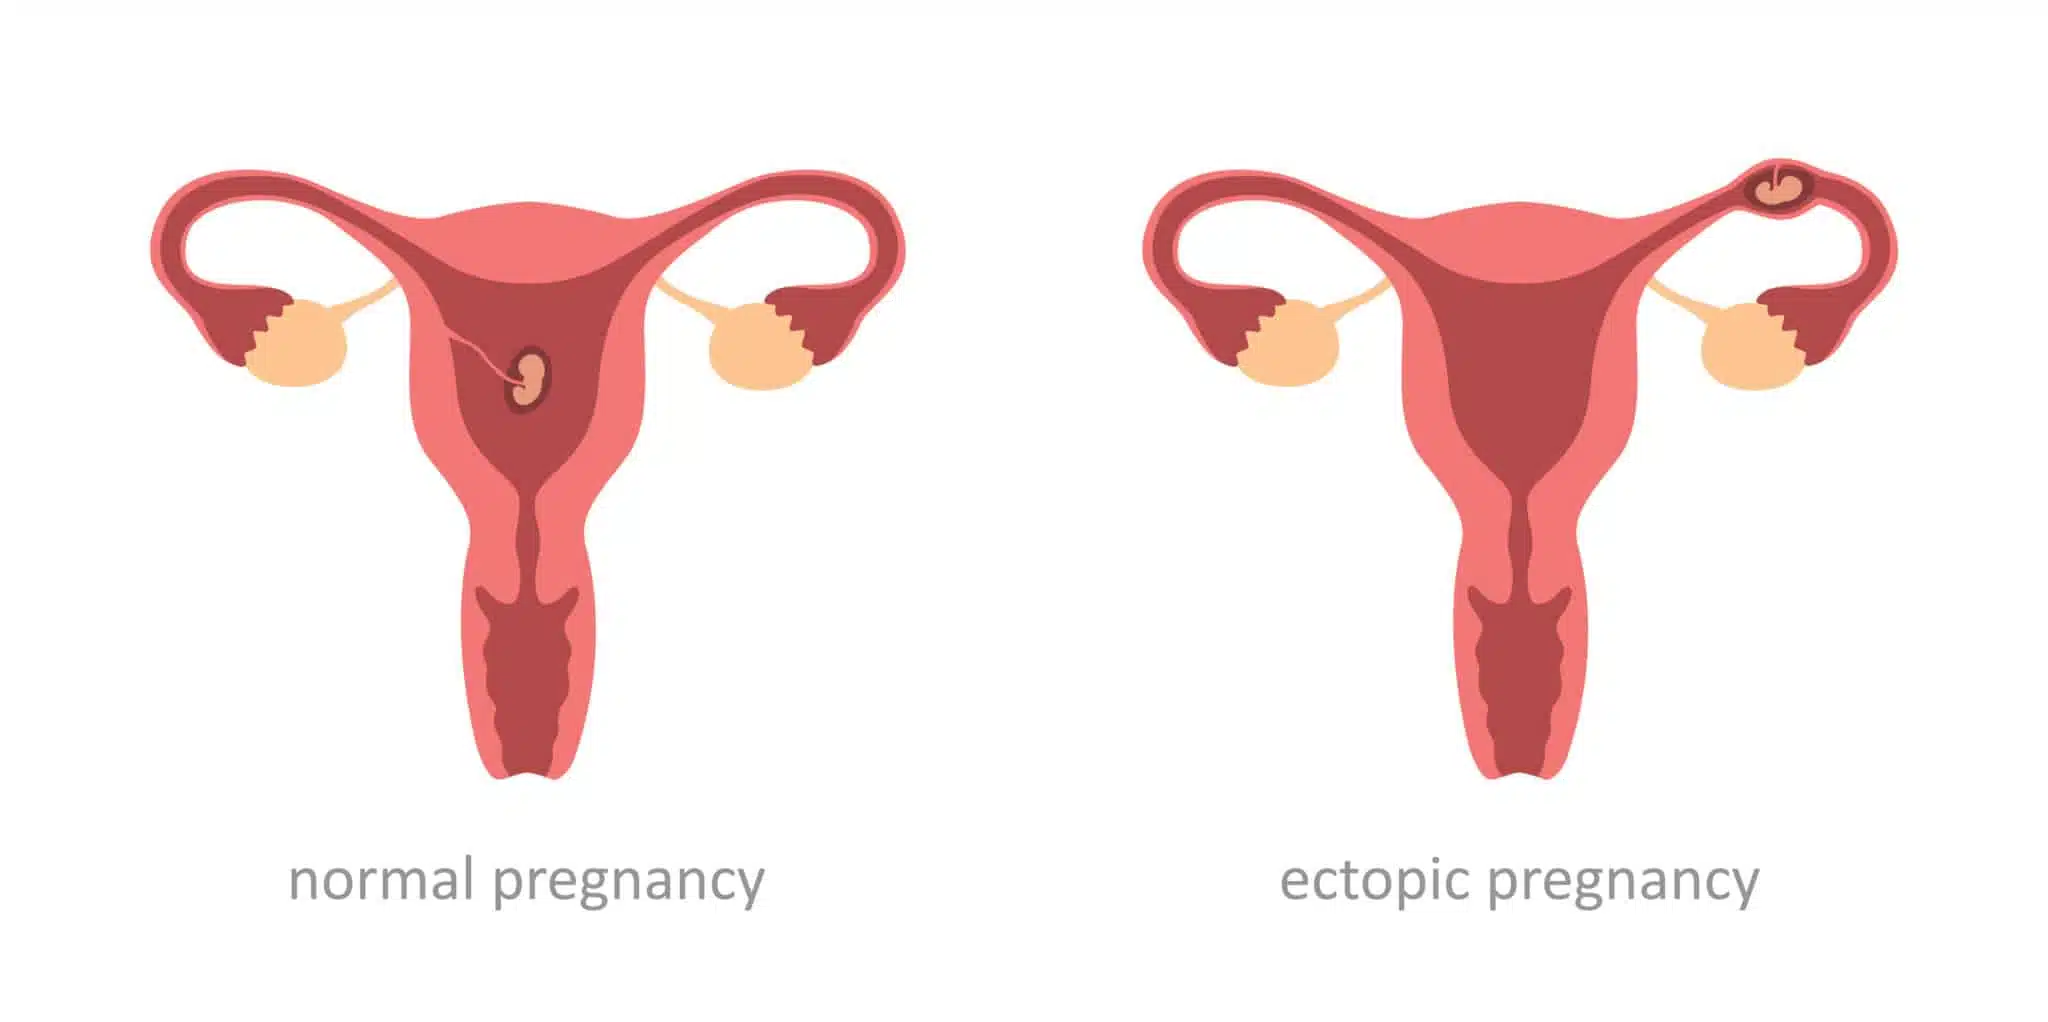 ectopic pregnancy vs normal pregnancy - principle of double effect